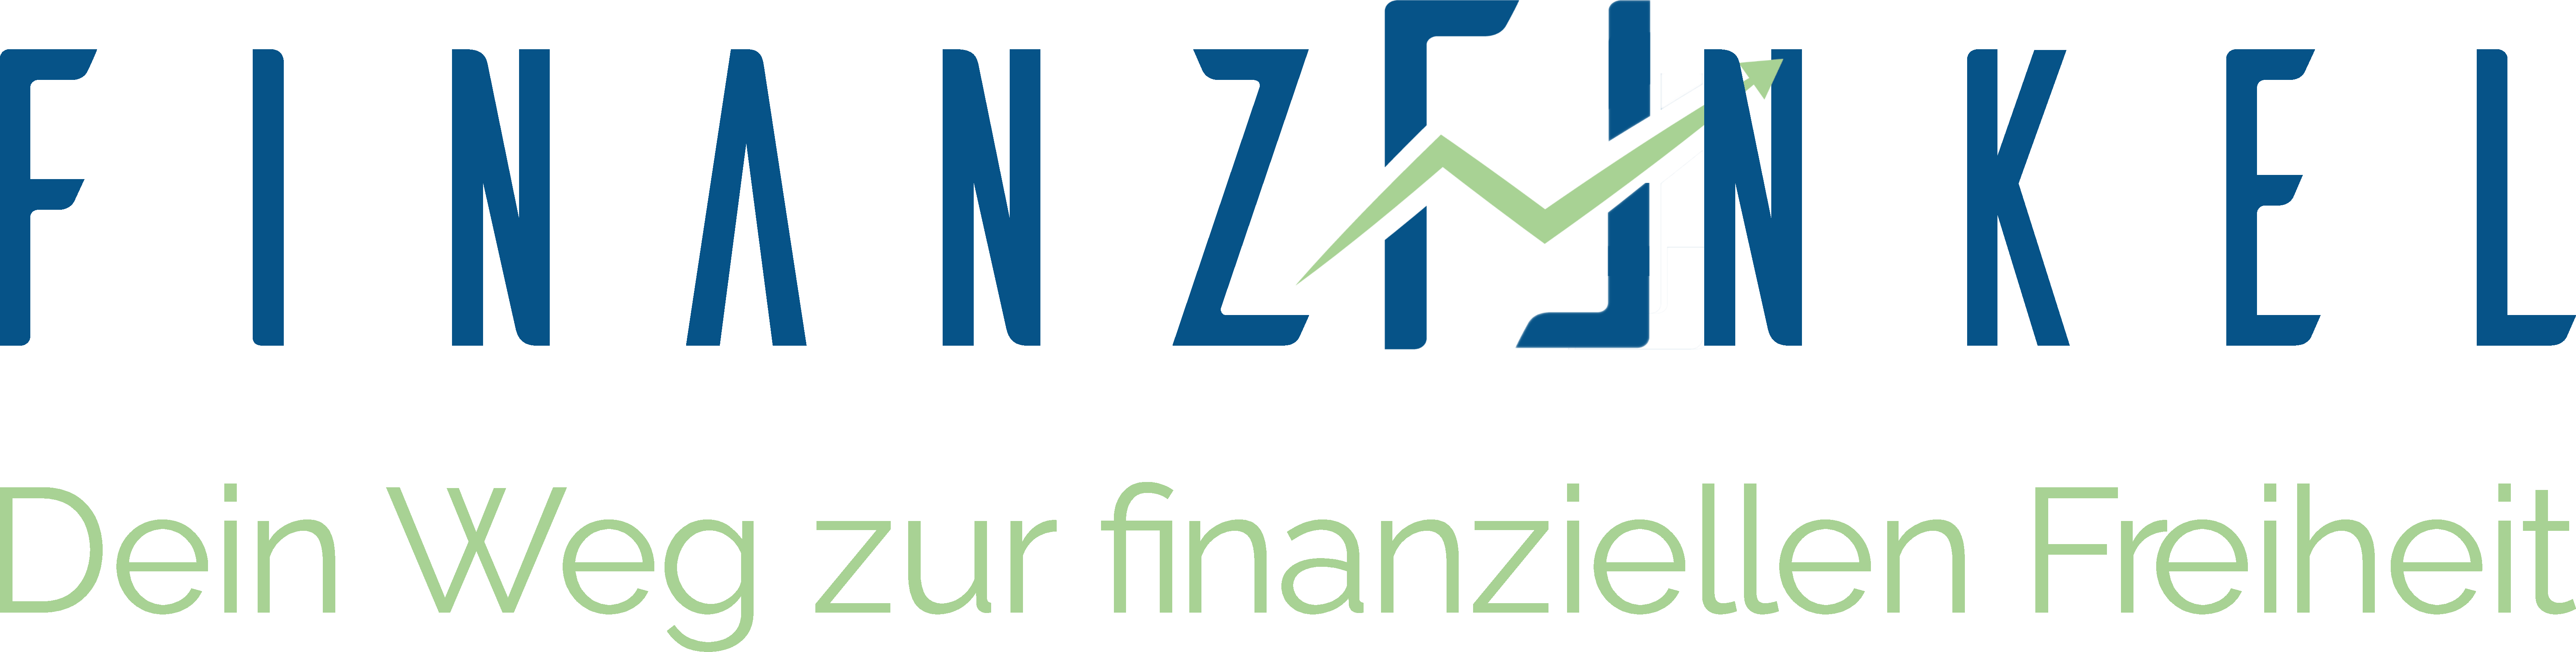 FinanzOnkel Logo